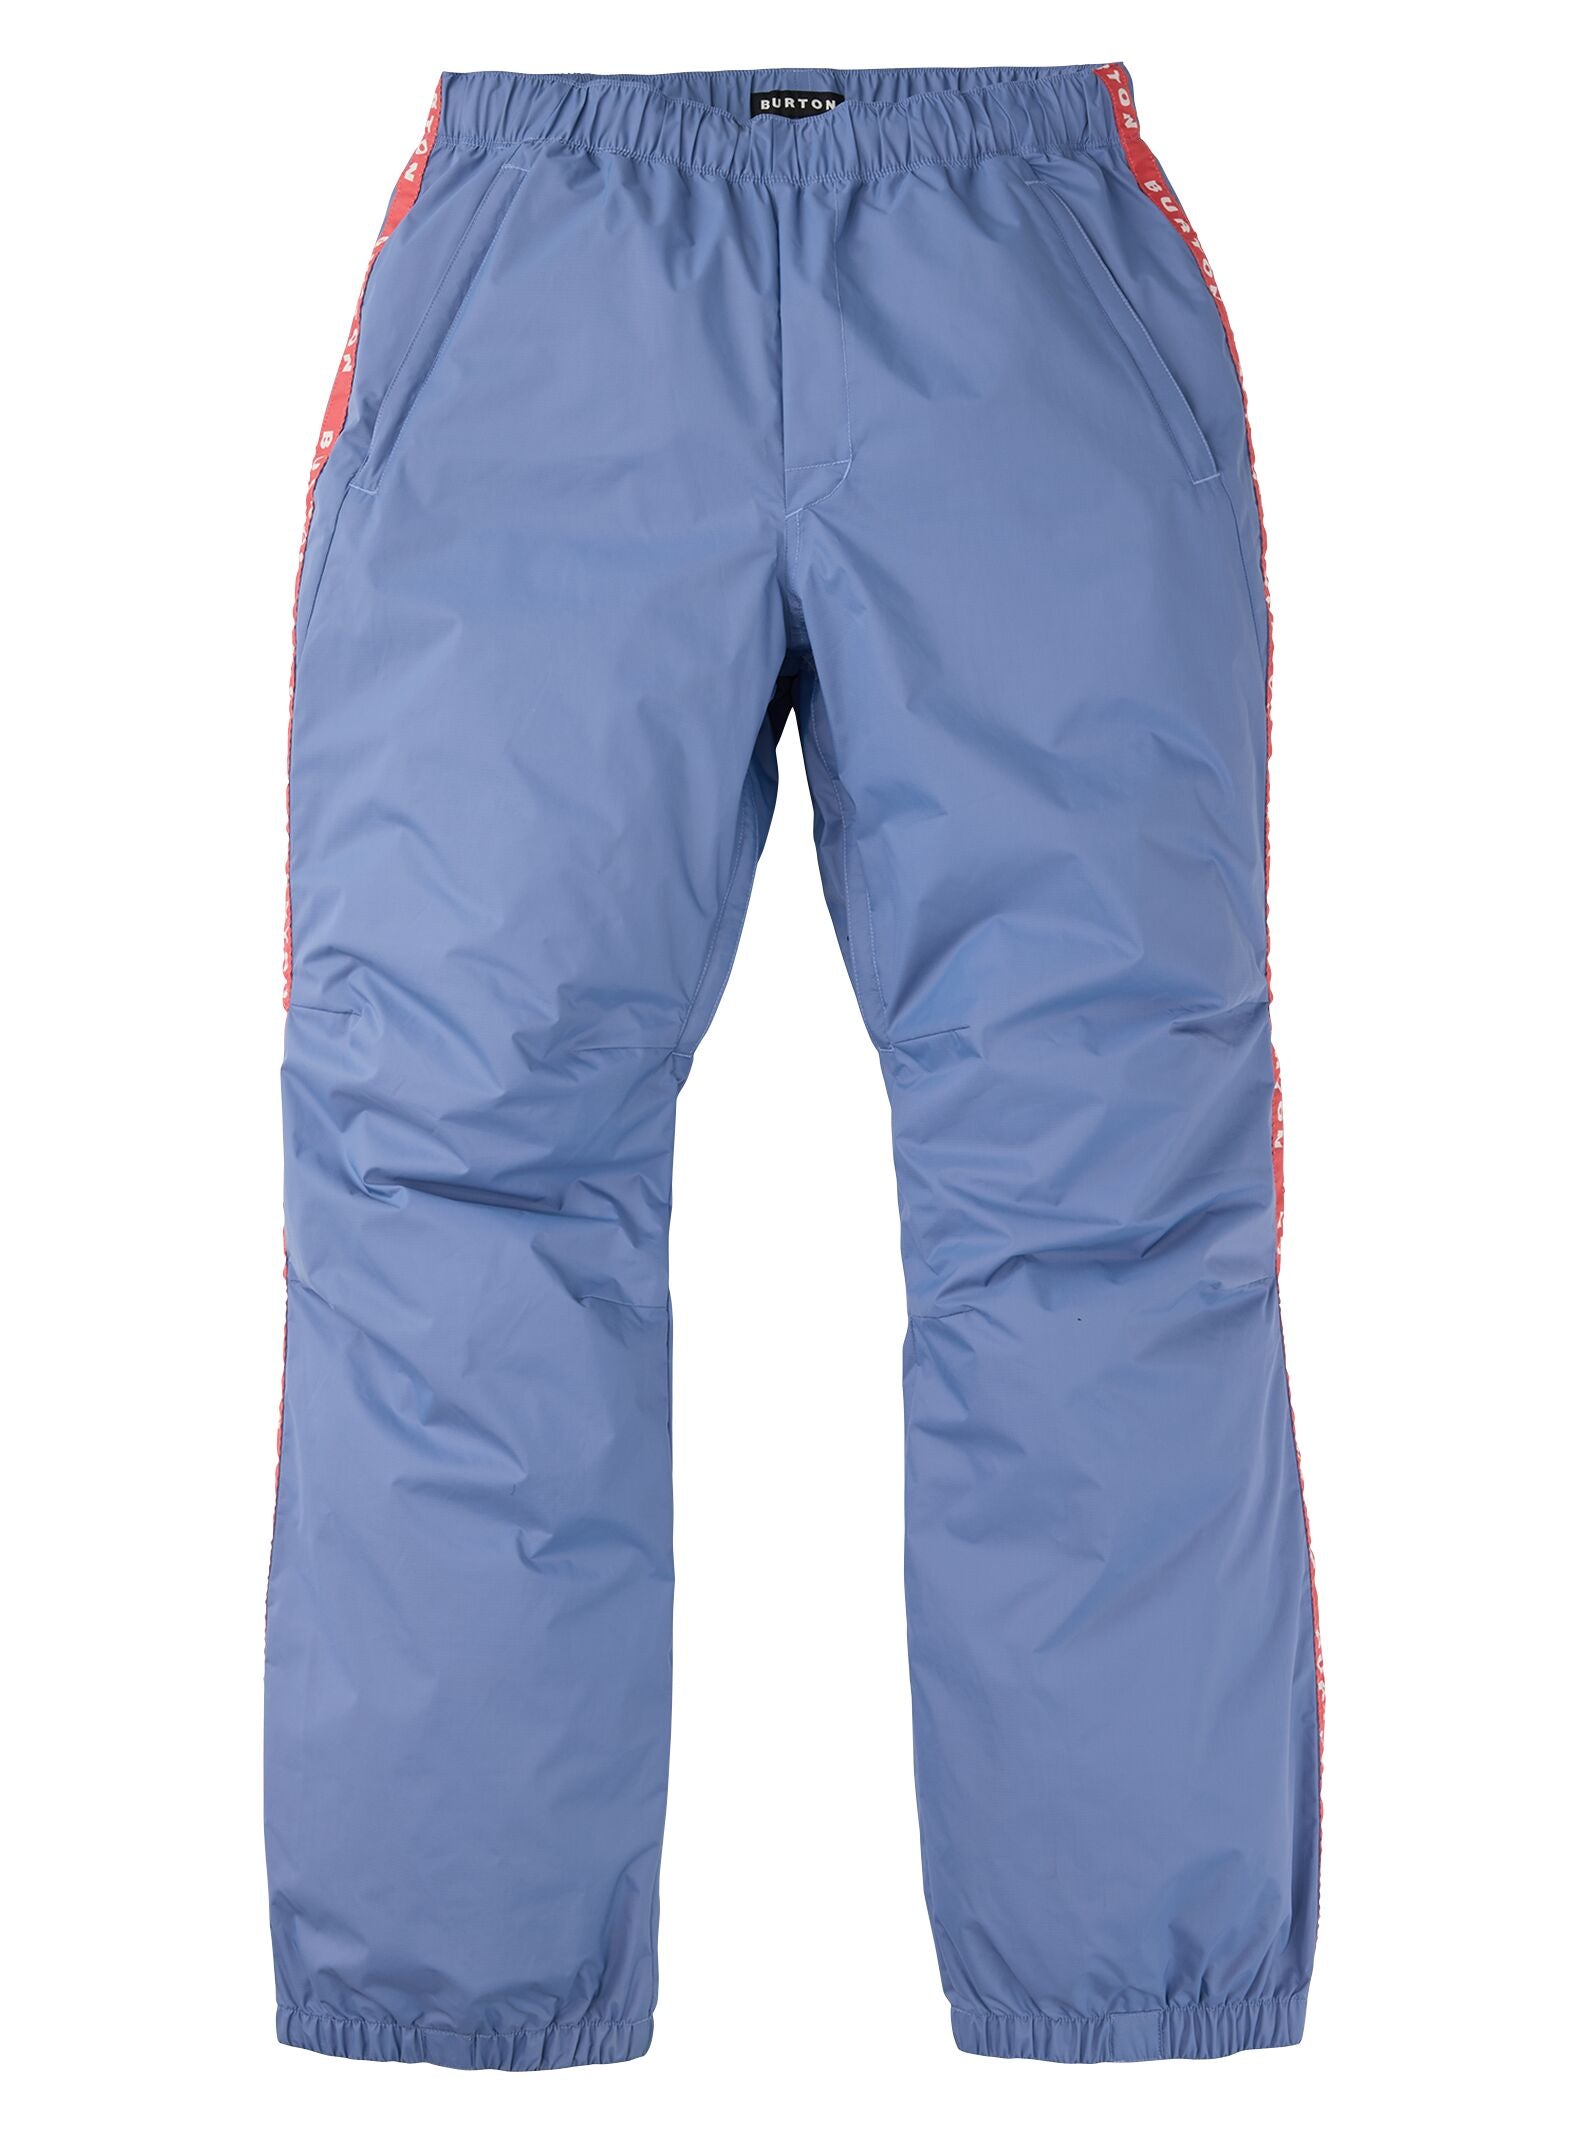 Quiksilver Snowboard Ski Snow Pants Size Medium Black Zipper Vents GUC |  Inox Wind